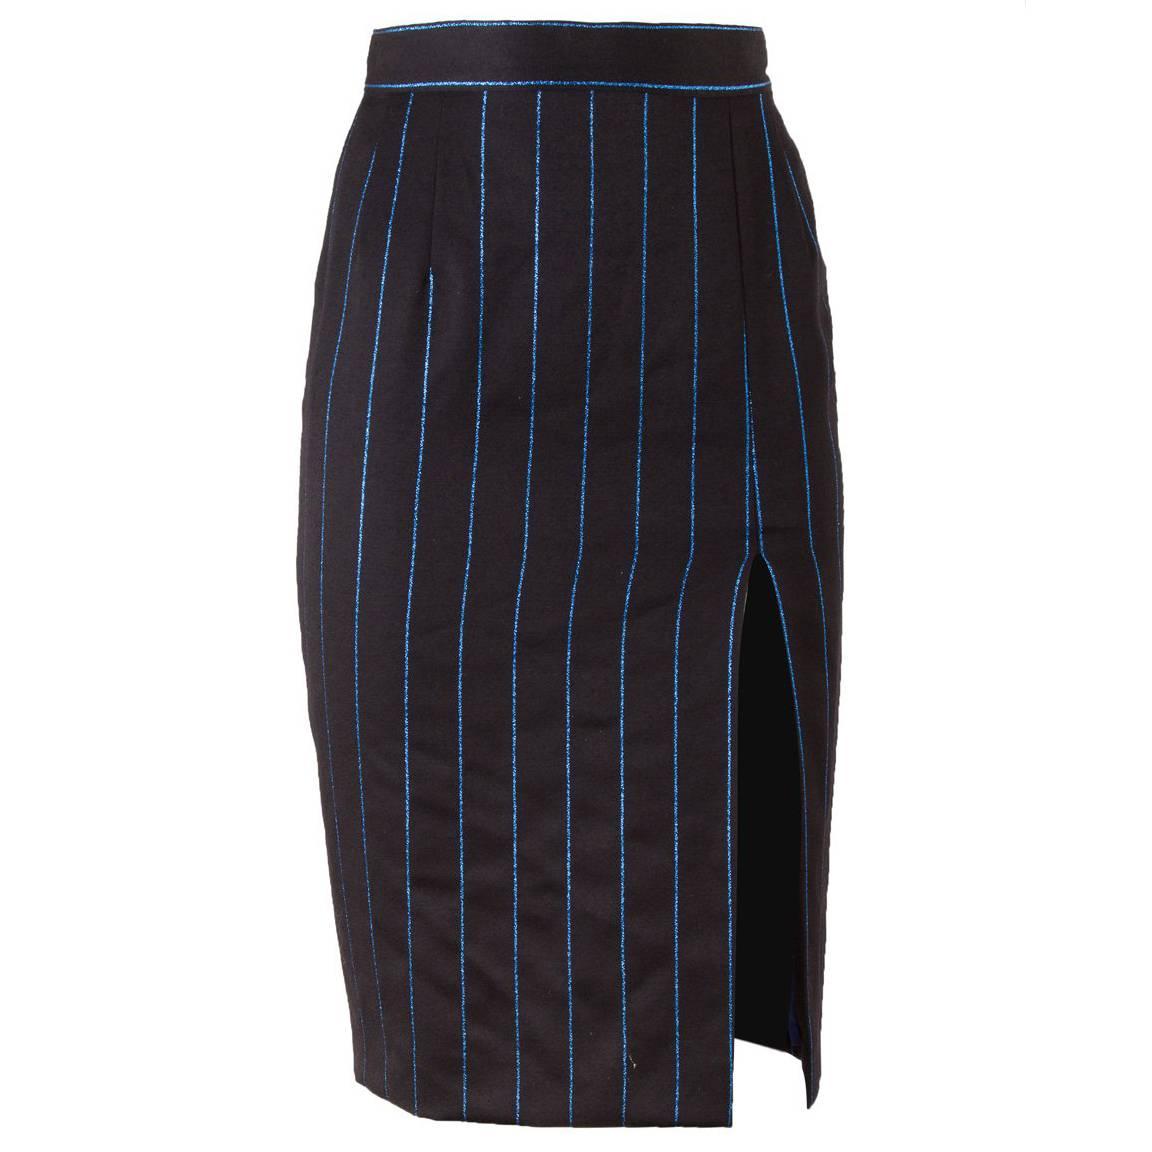 Chantal Thomass 1980's NWT Black Pinstripe Pencil Skirt